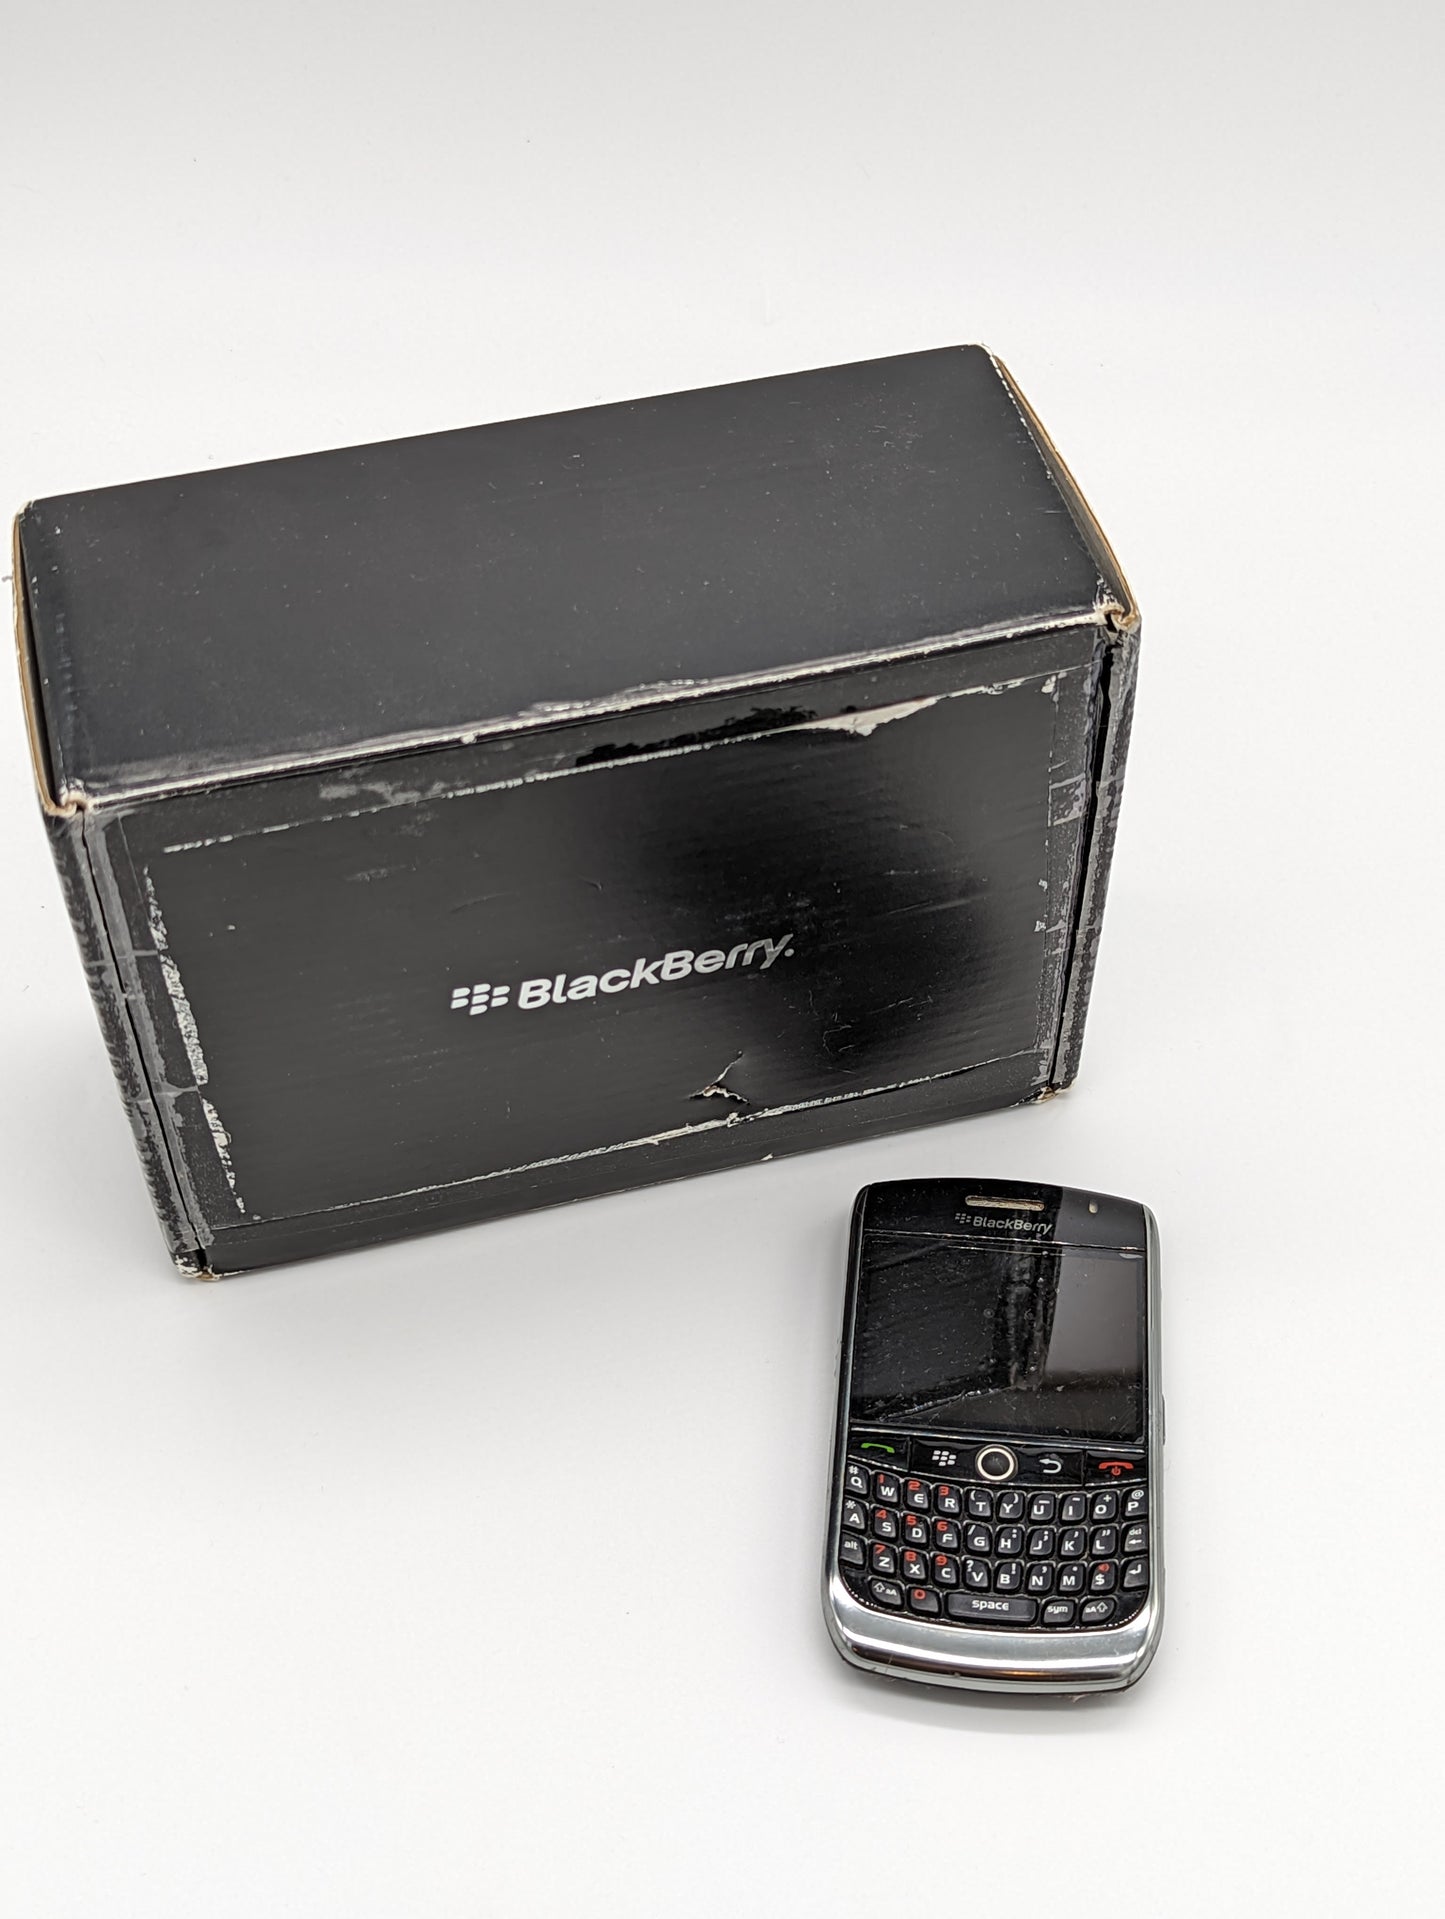 RIM Blackberry Line (2003-2009)